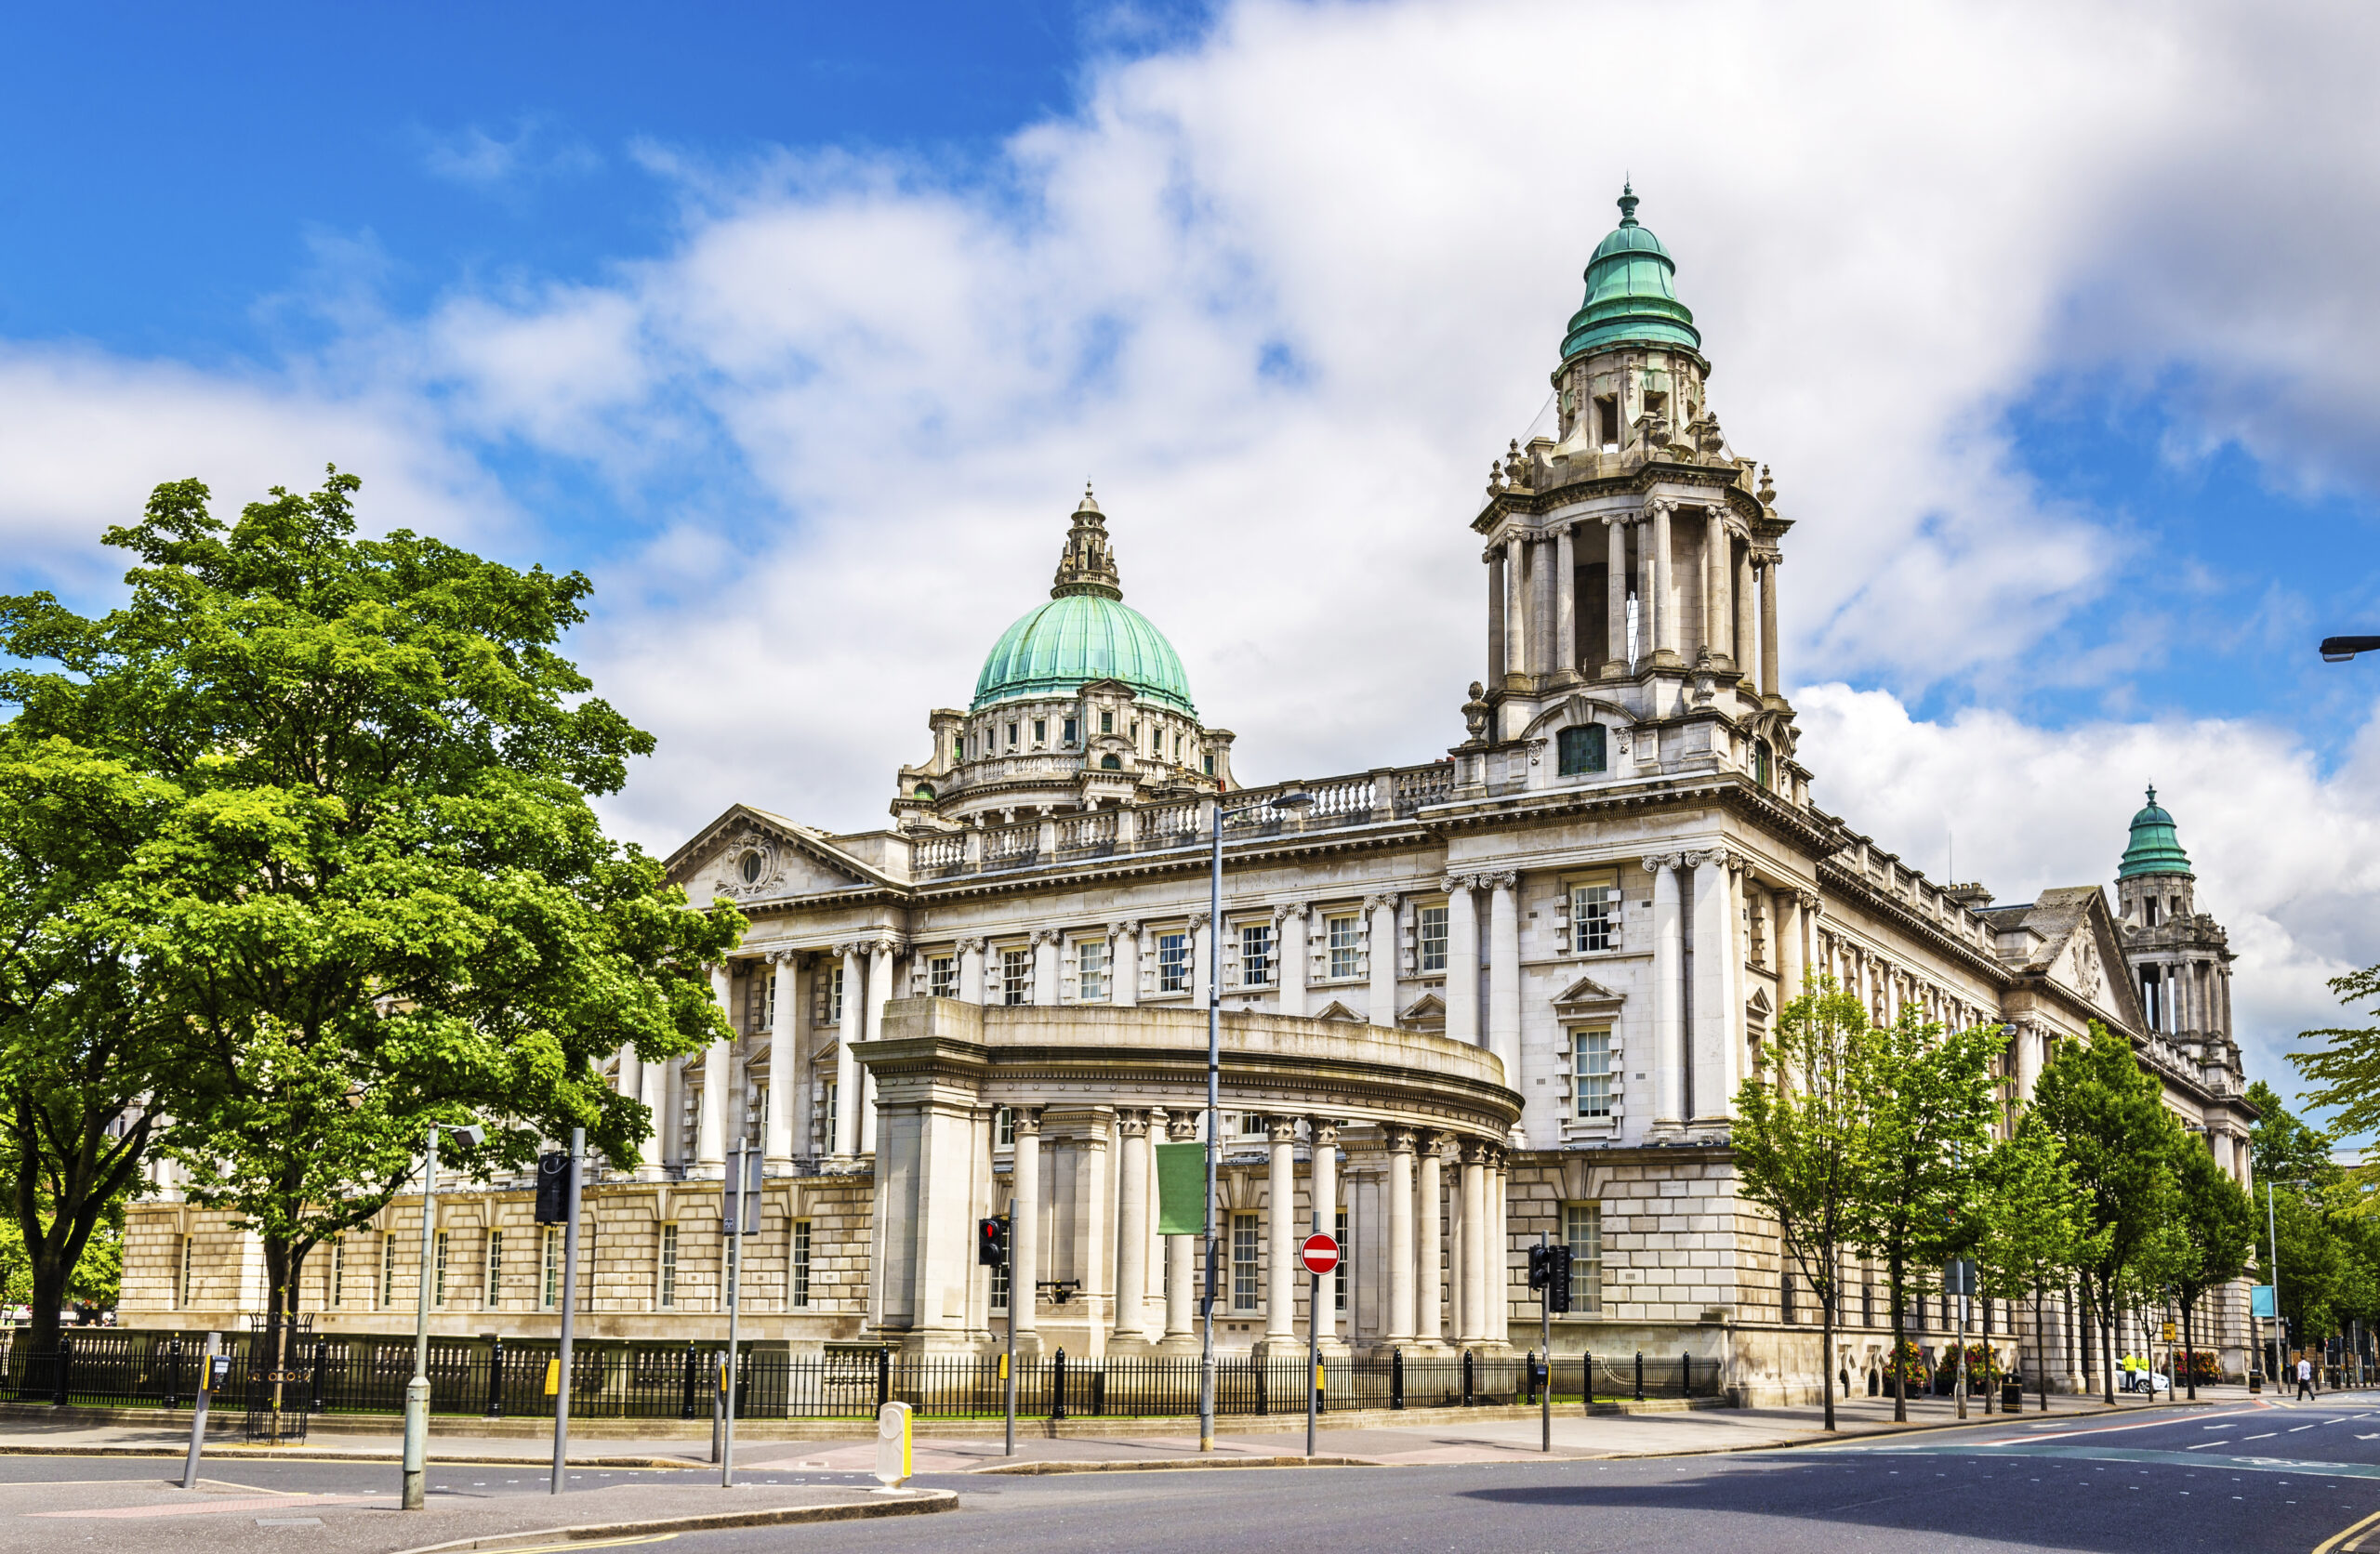 Despre Belfast (Irlanda), cand sa mergi, perioade bune si atractii turistice